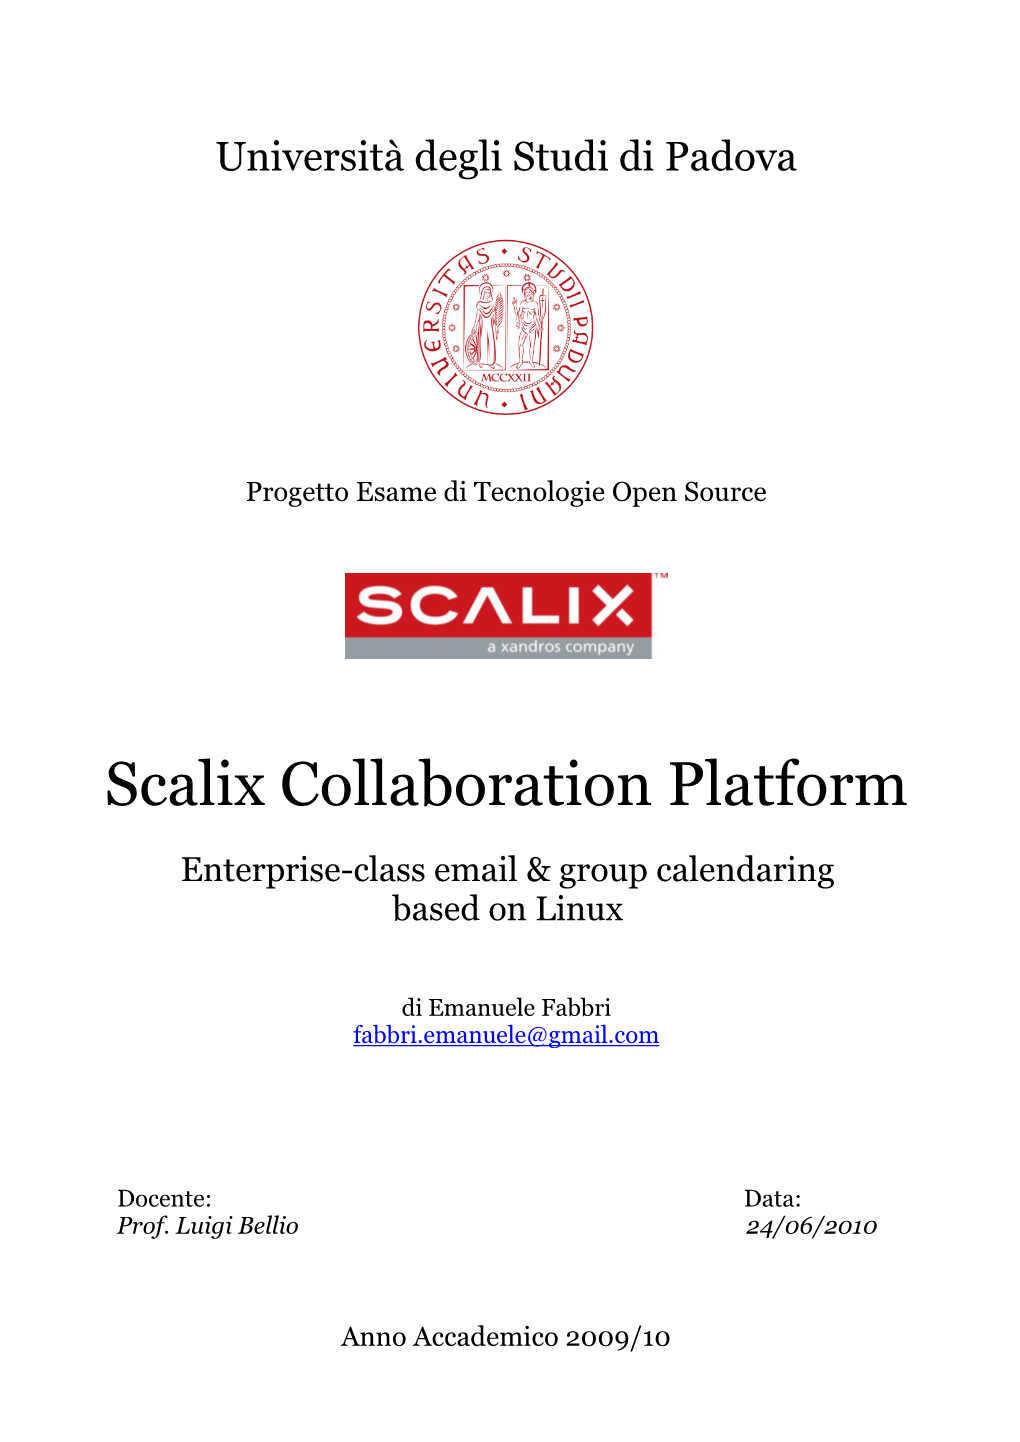 Scalix Collaboration Platform